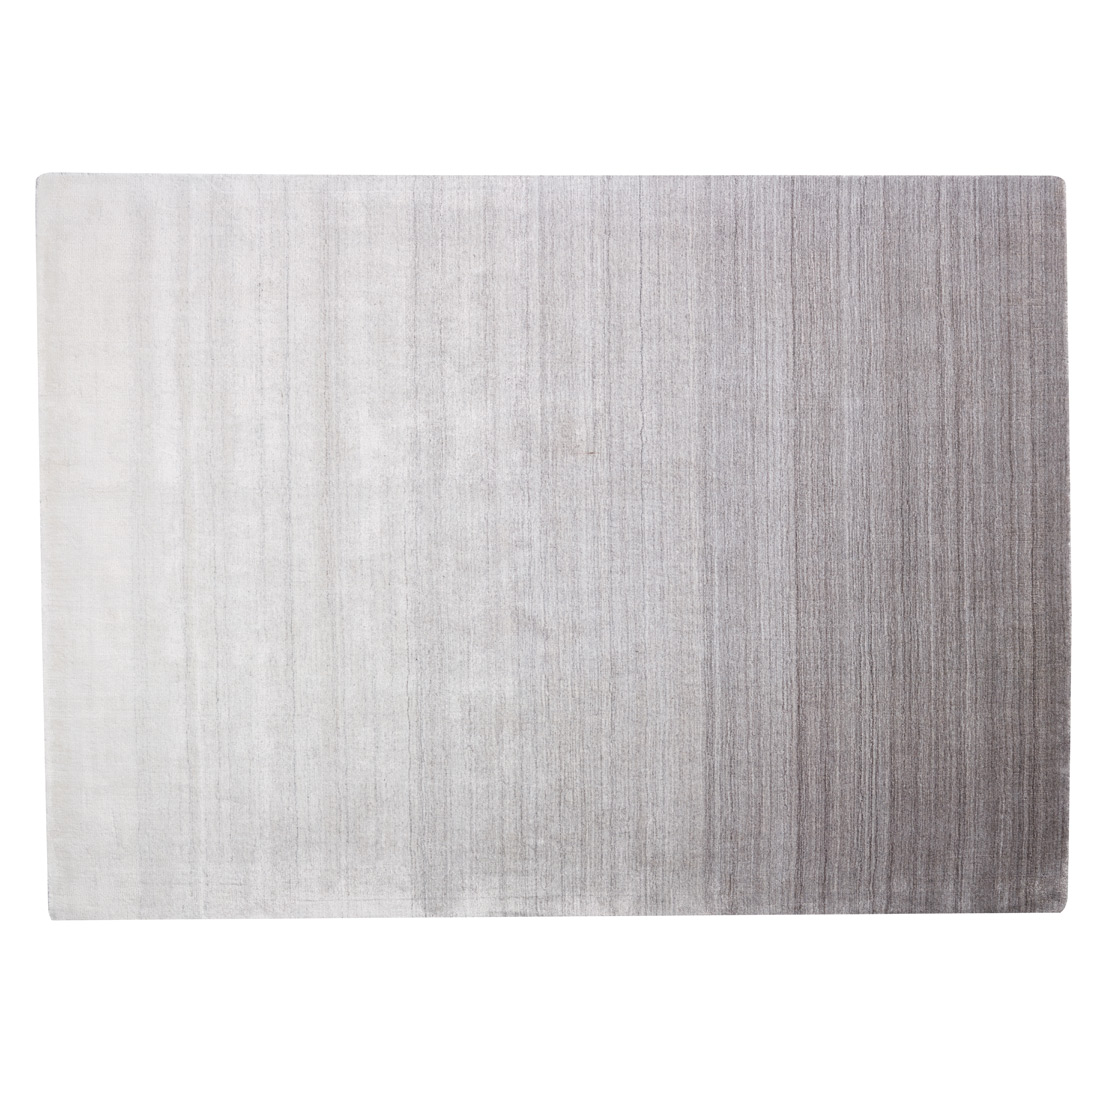 Teppich Xilento Admire Eifenbein | 200 x 300 cm